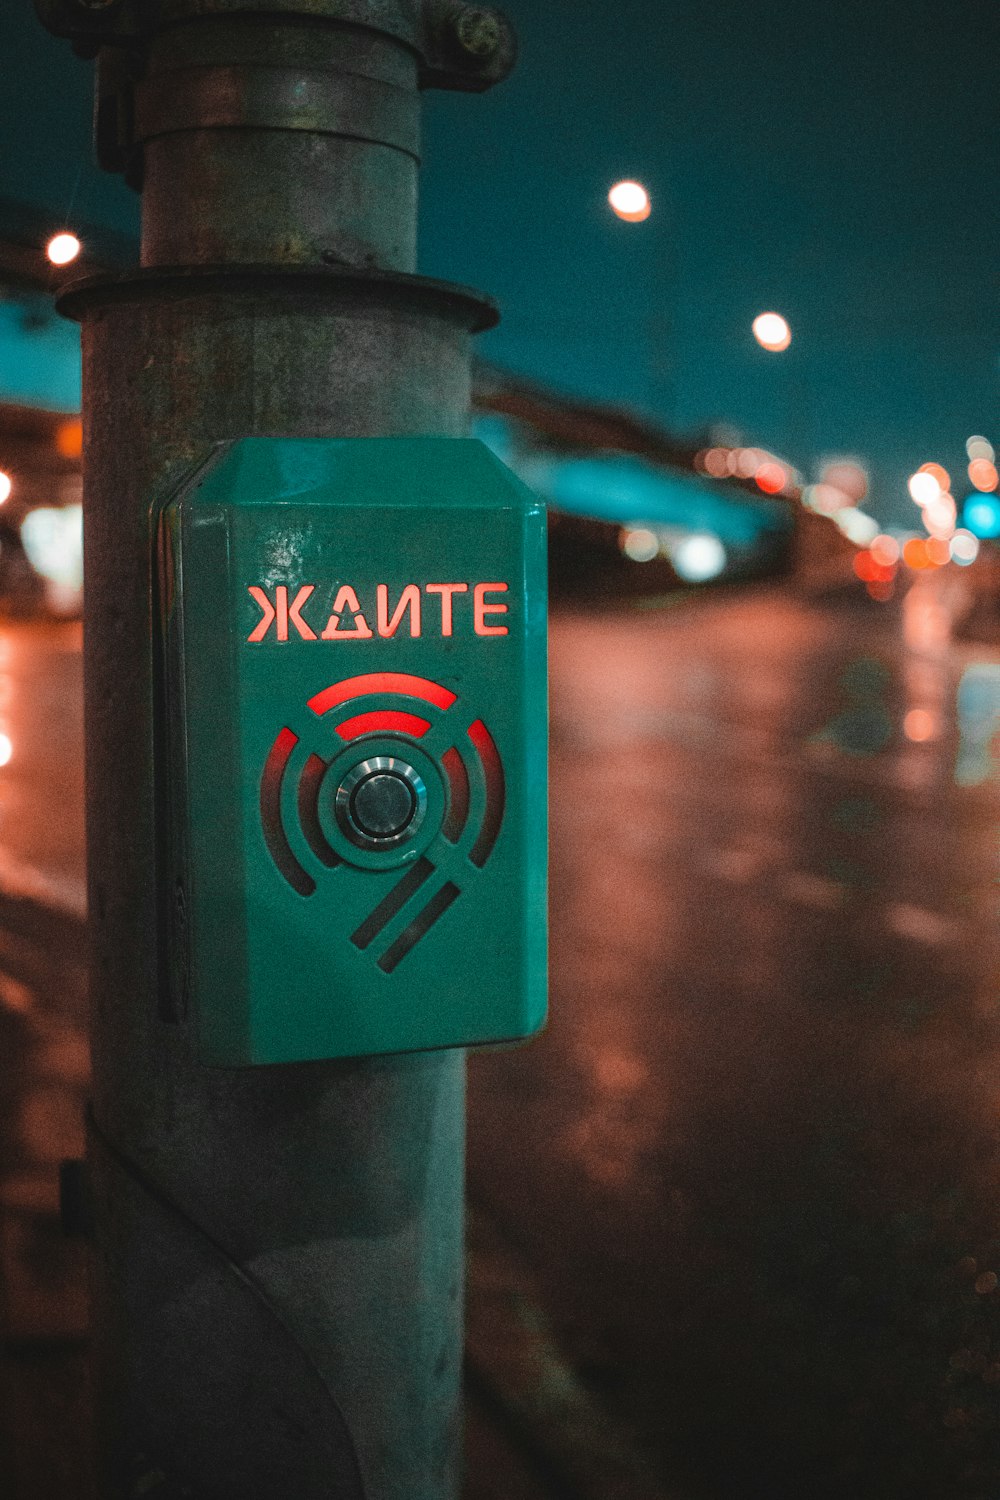 a green sign on a pole on a city street